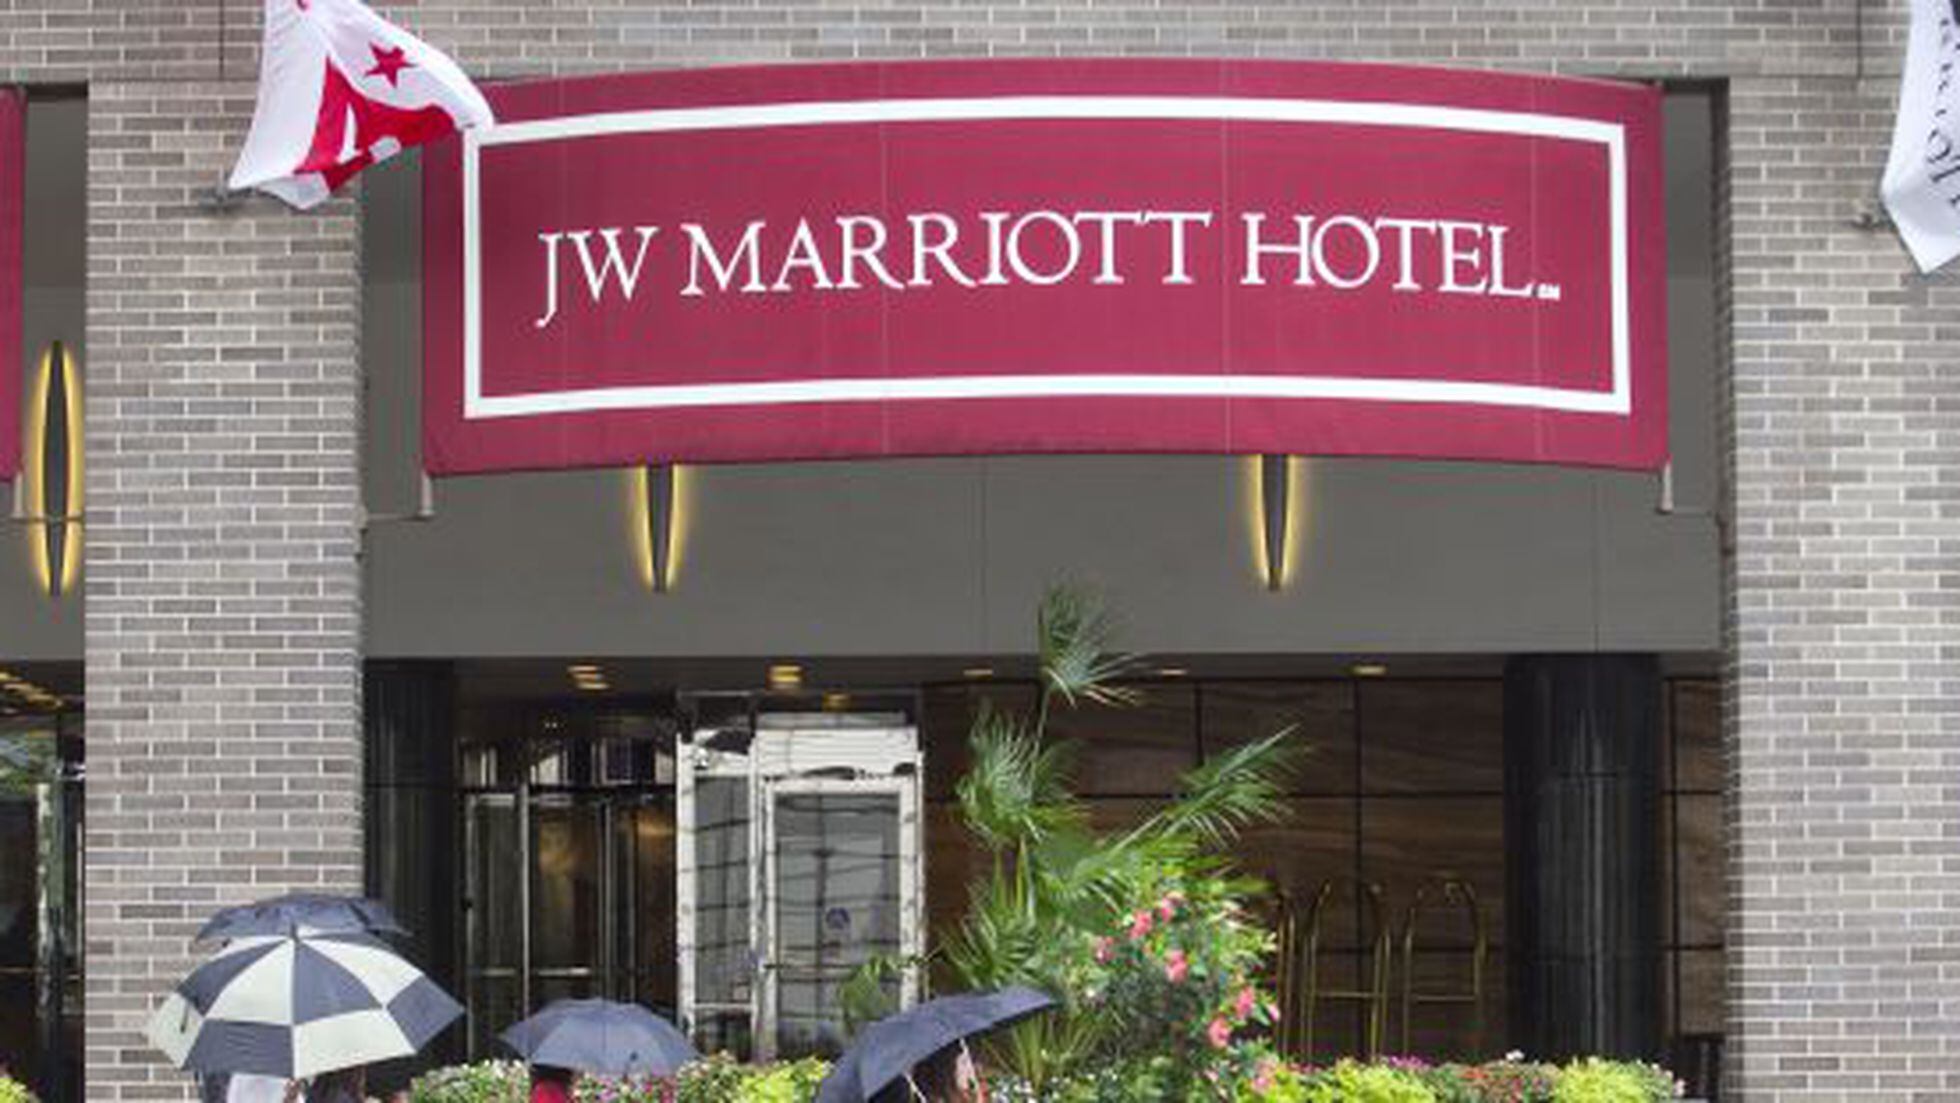 Hoteles Marriott se digitaliza